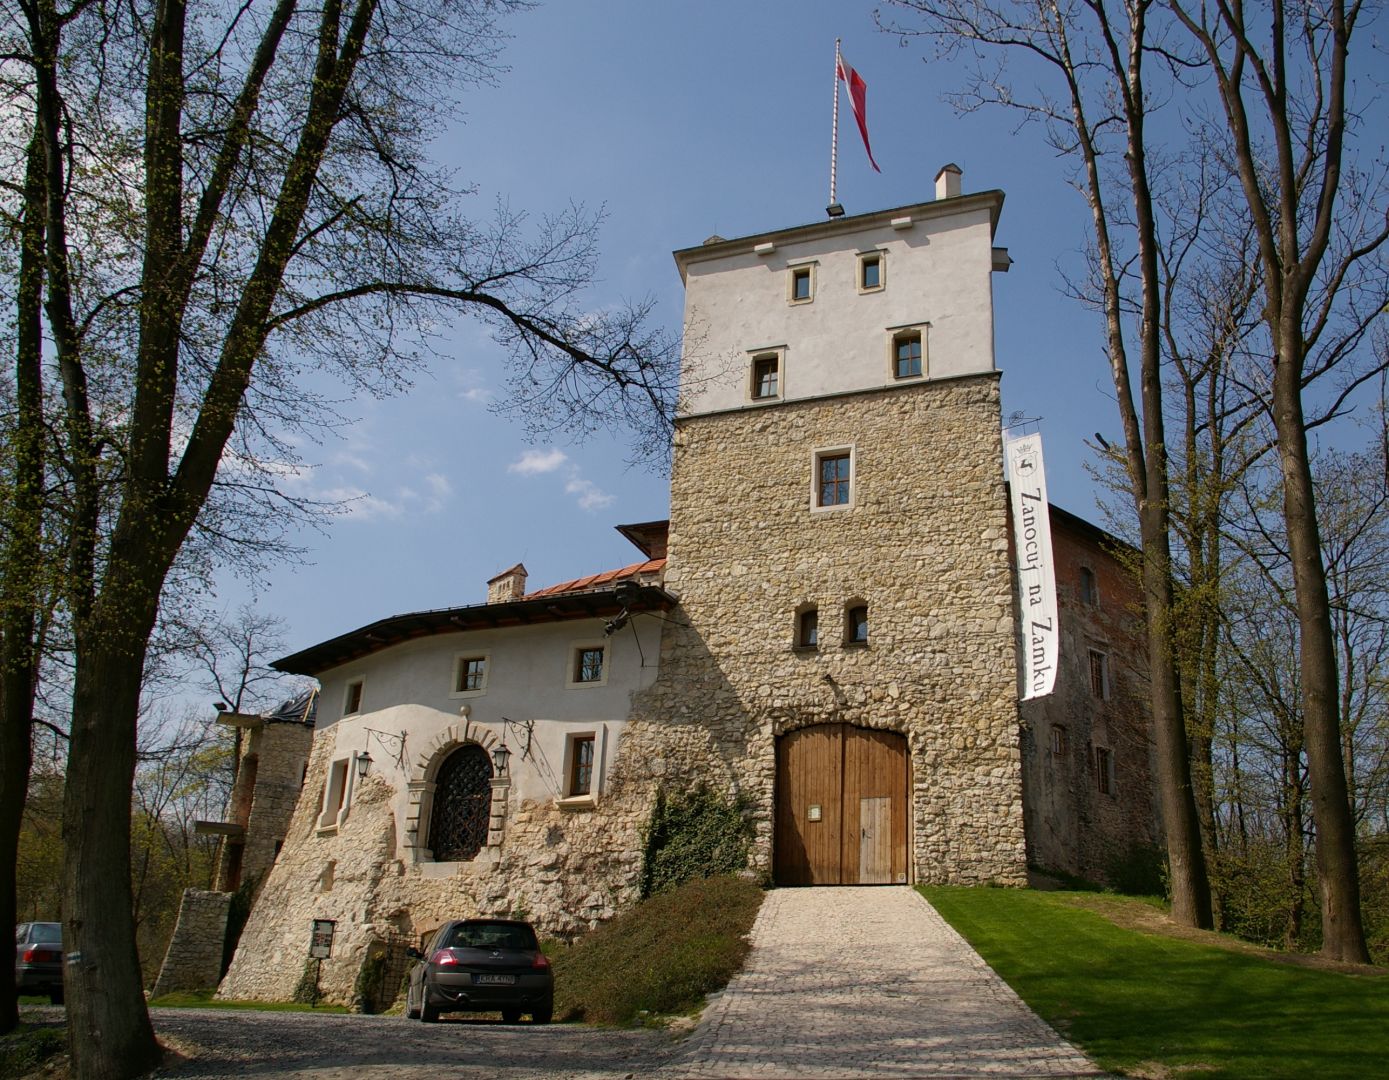 Zamek rycerski